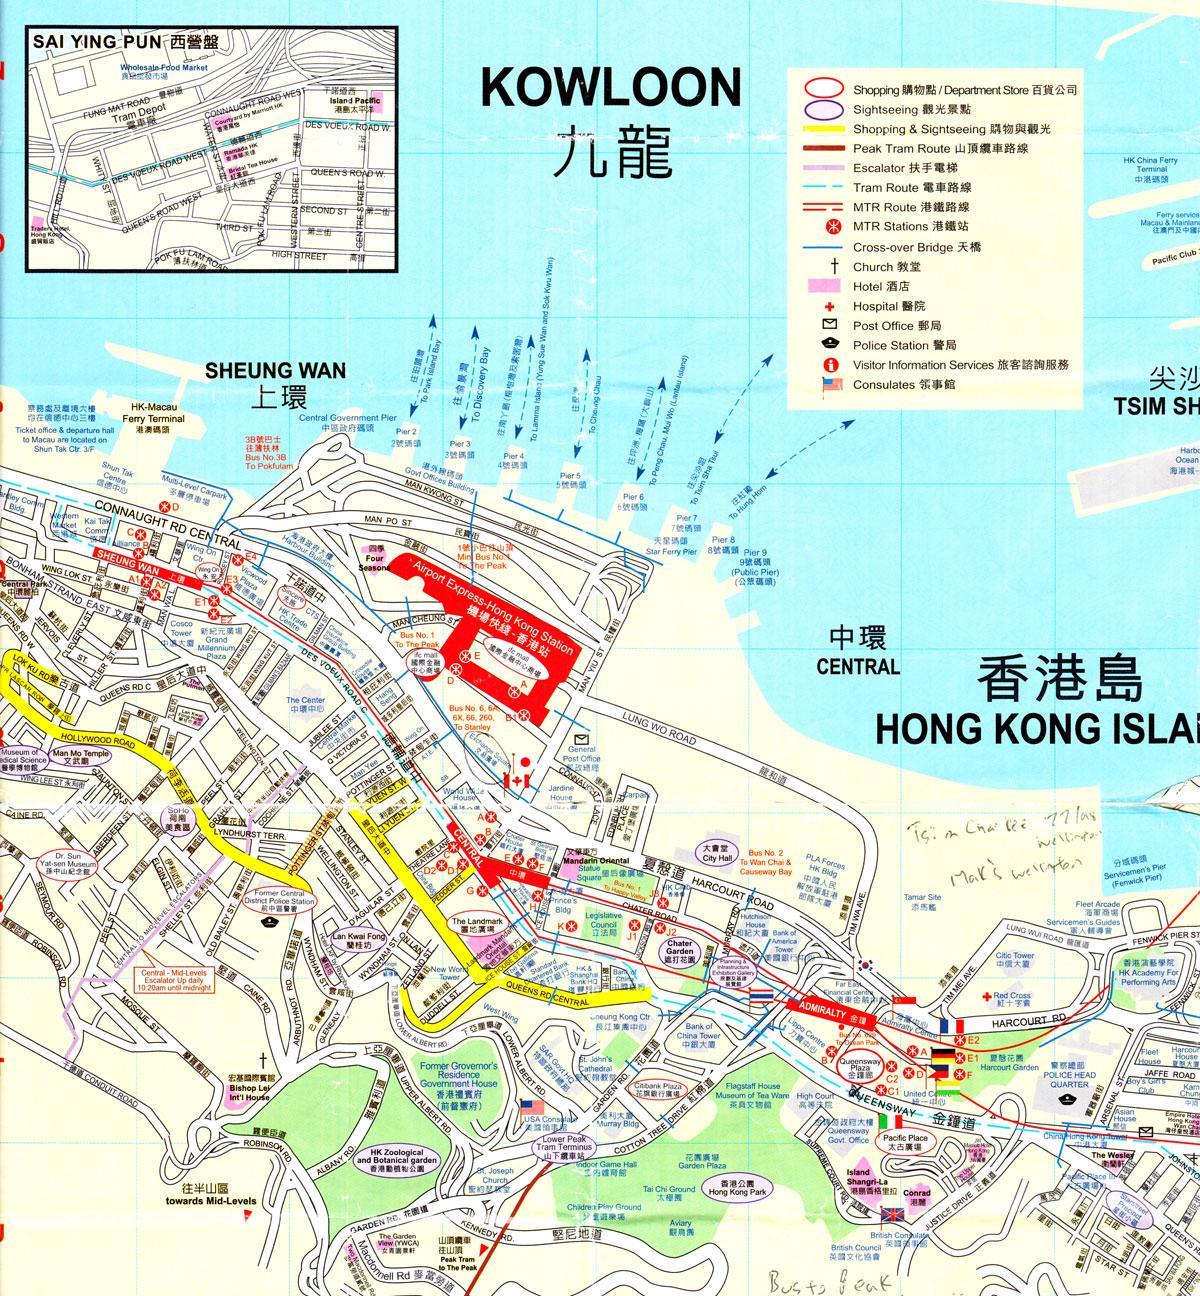 пристанището на Хонг конг картата